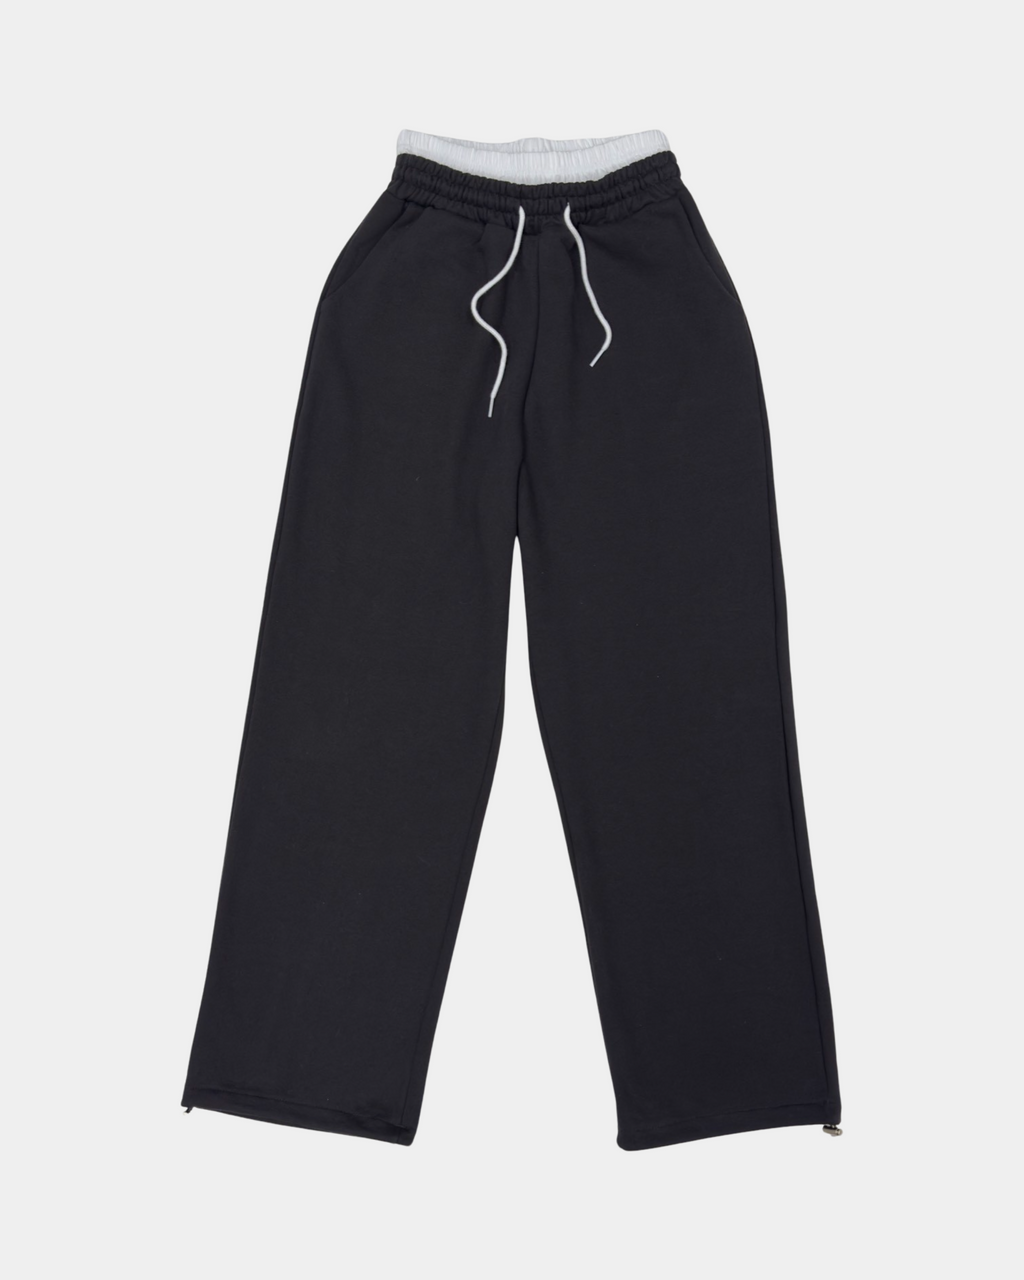 killwinner street polyester simple solid sweatpants